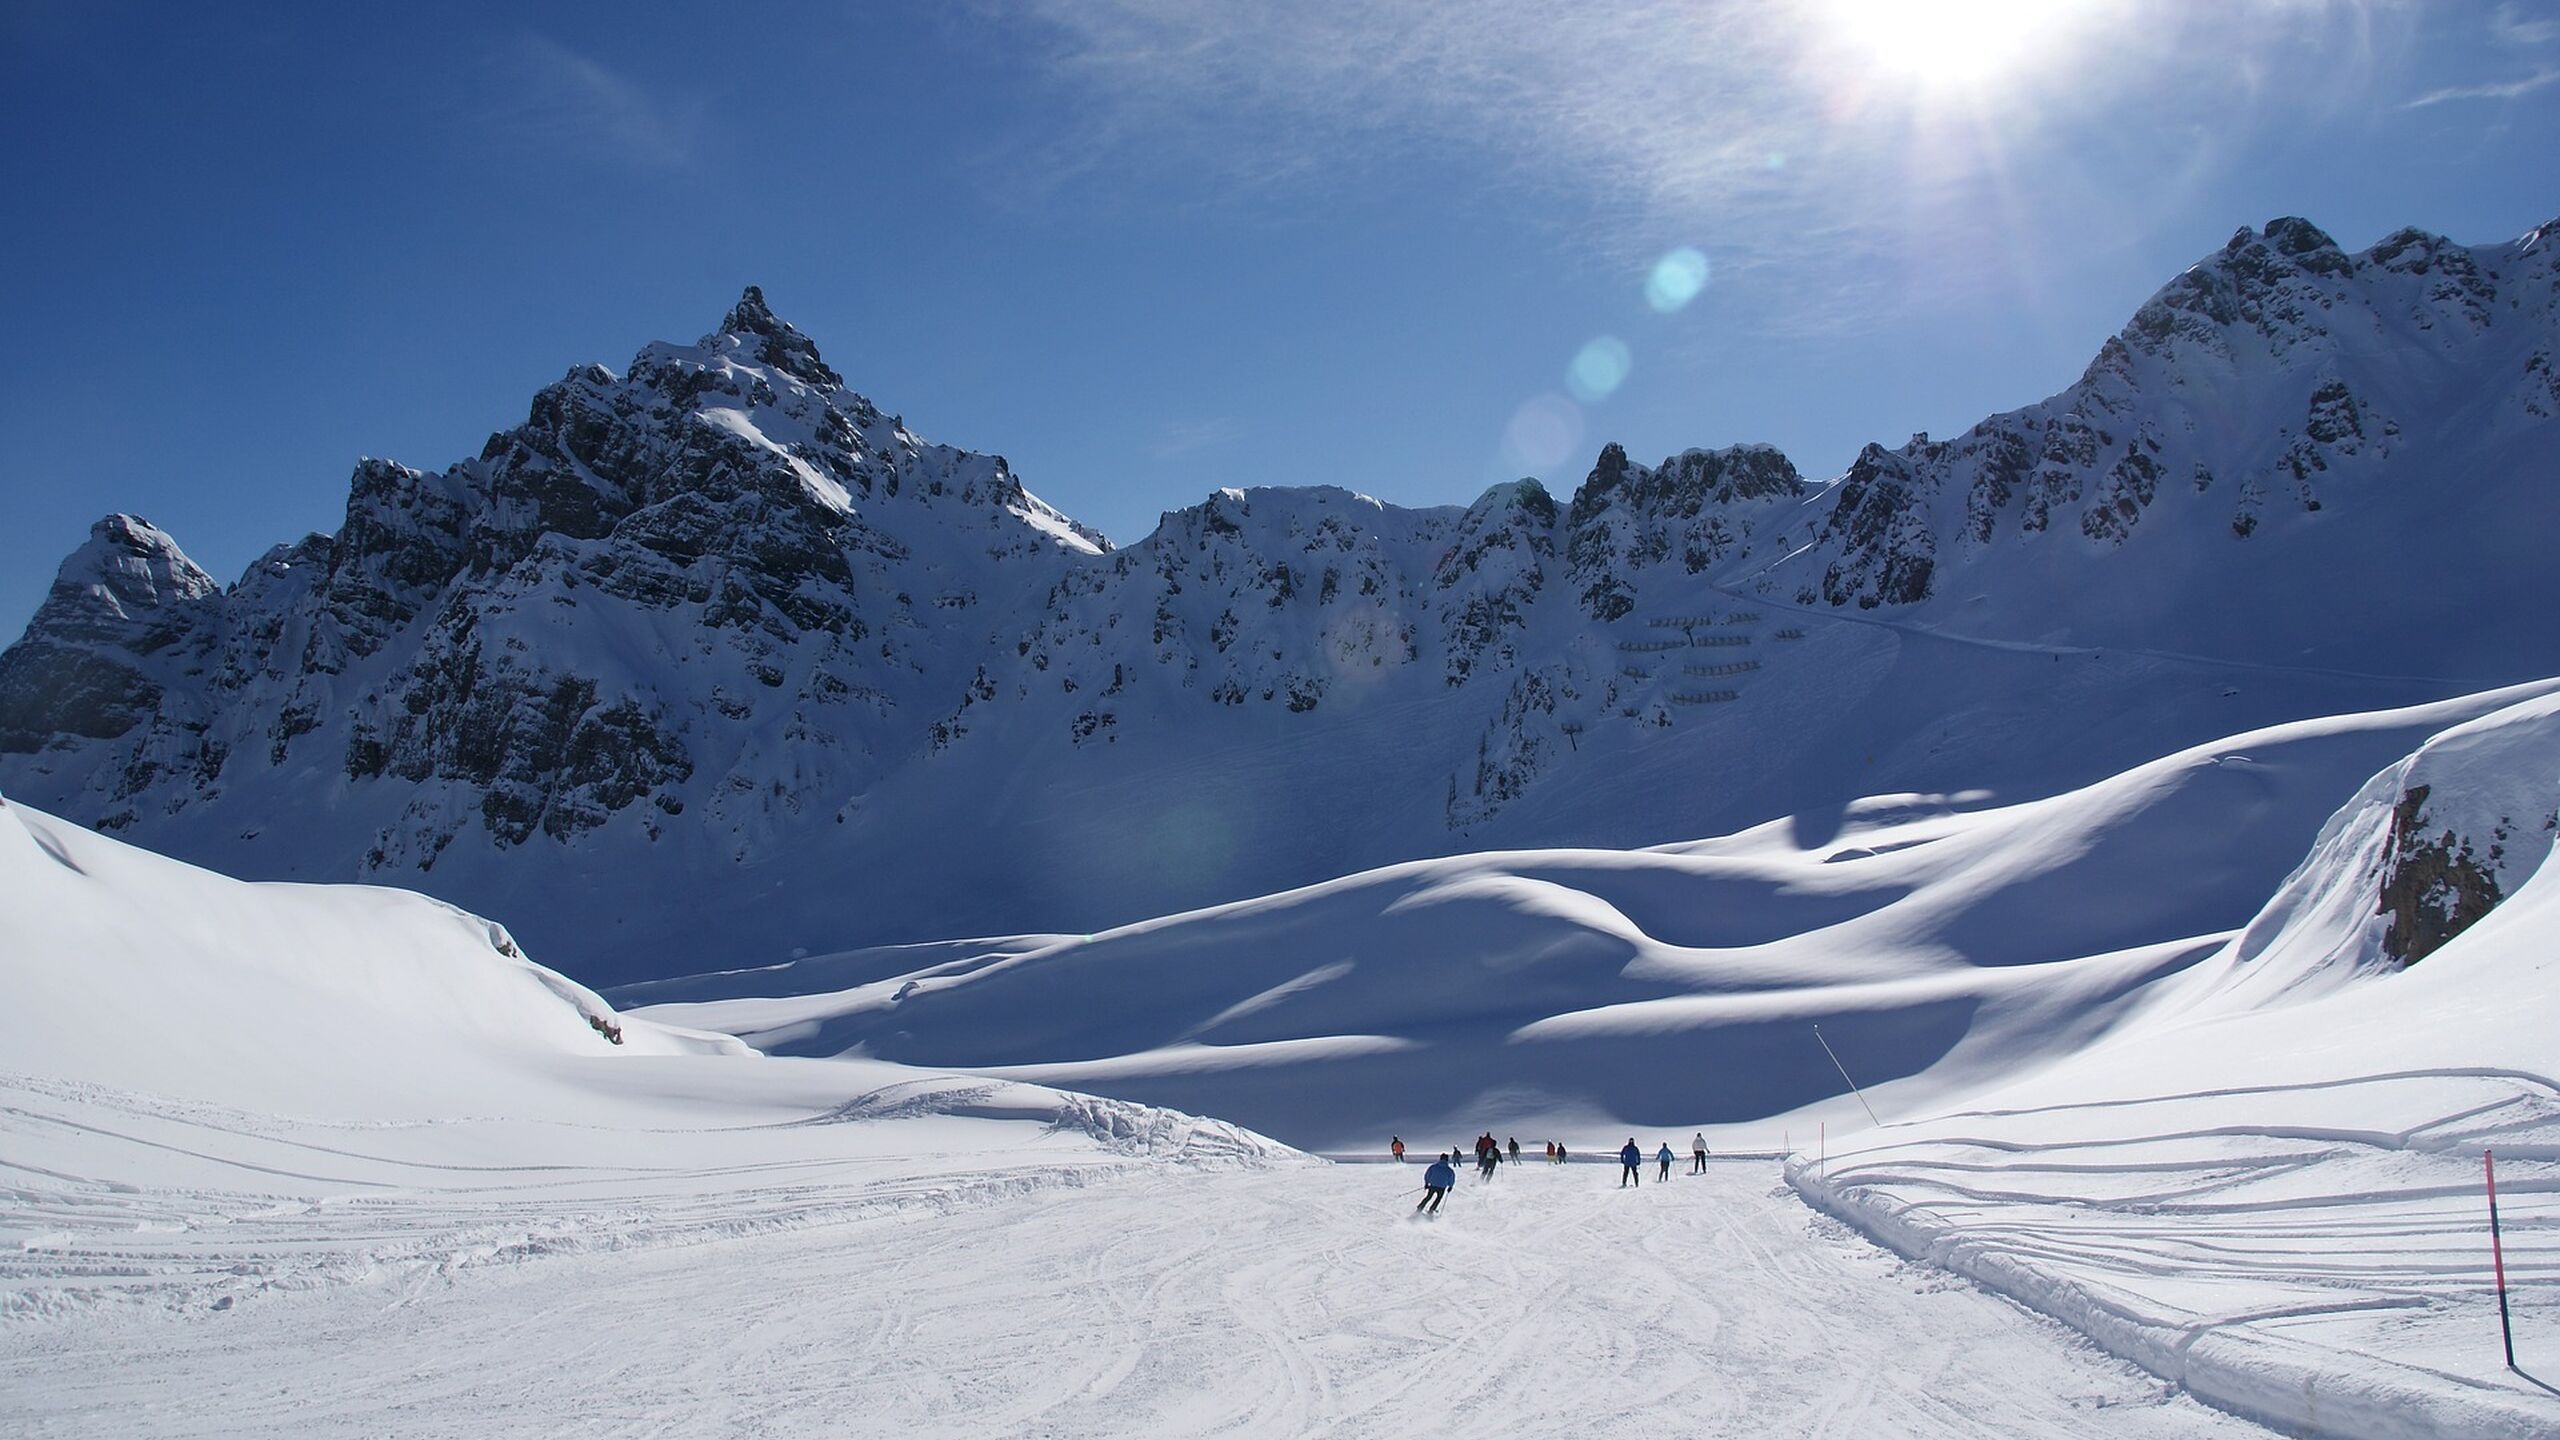 Embark on a captivating ski safari towards the stunning Marmolada glacier